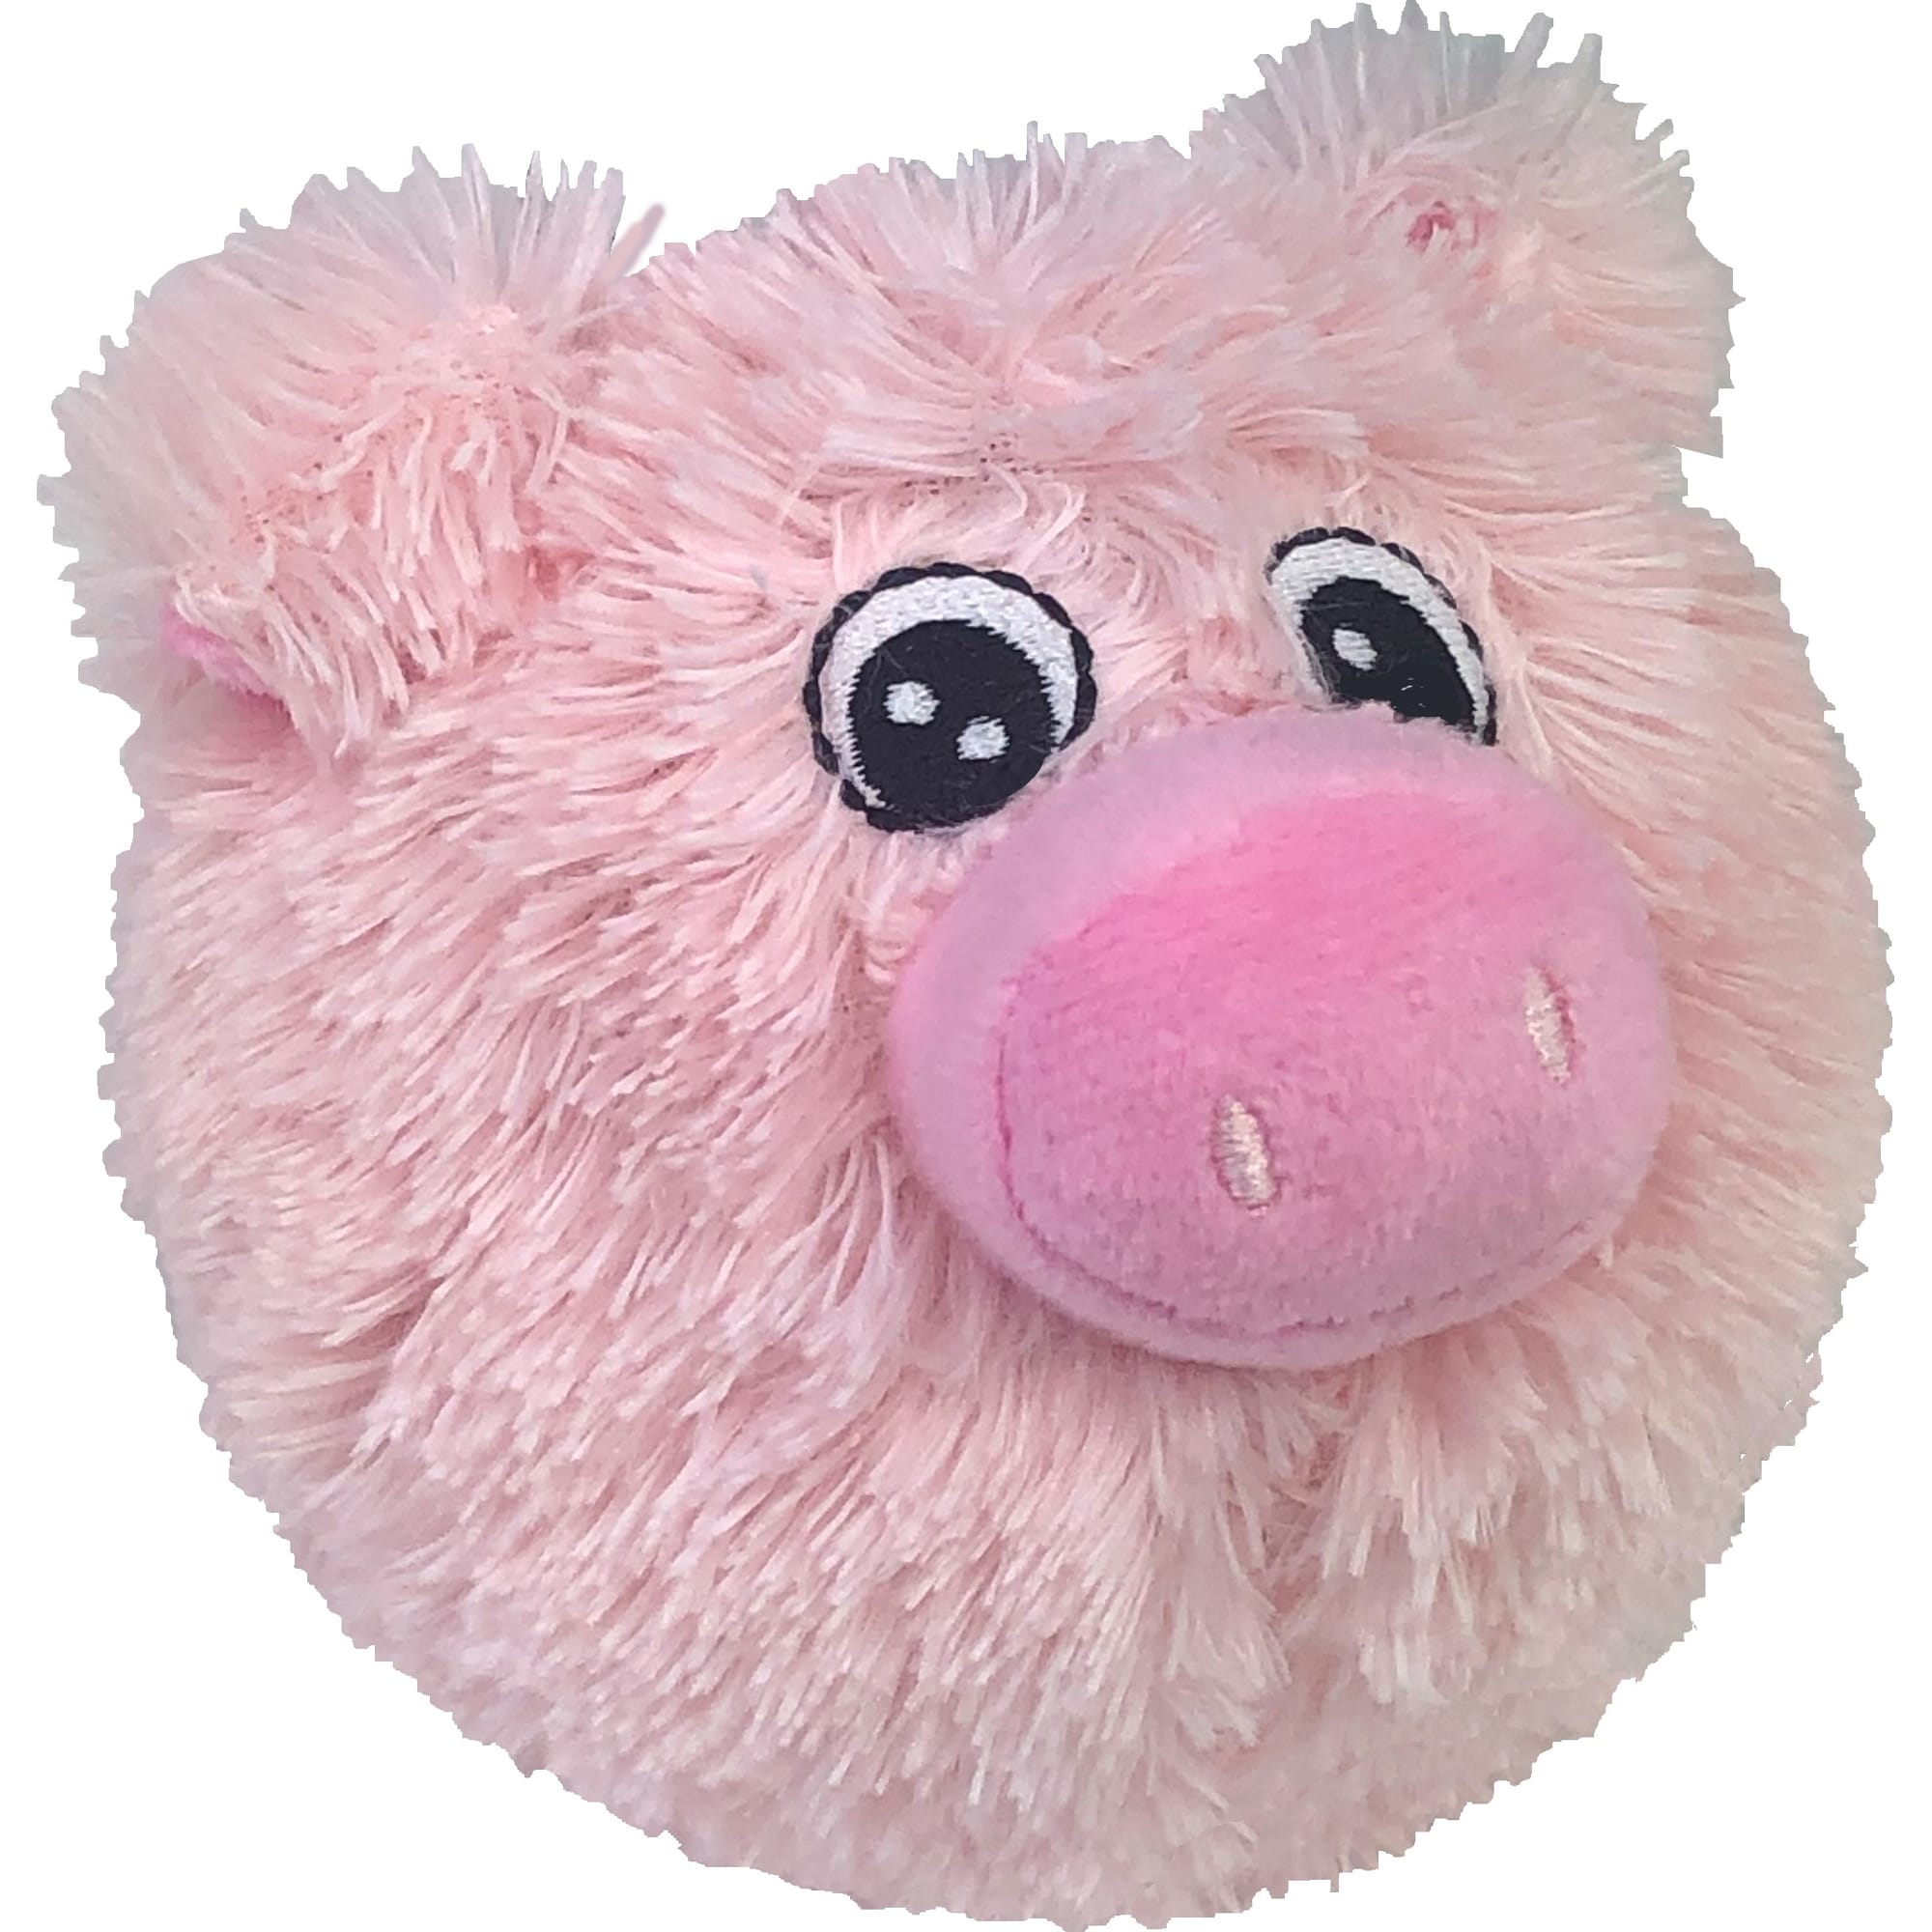 pink stuffed dog toy